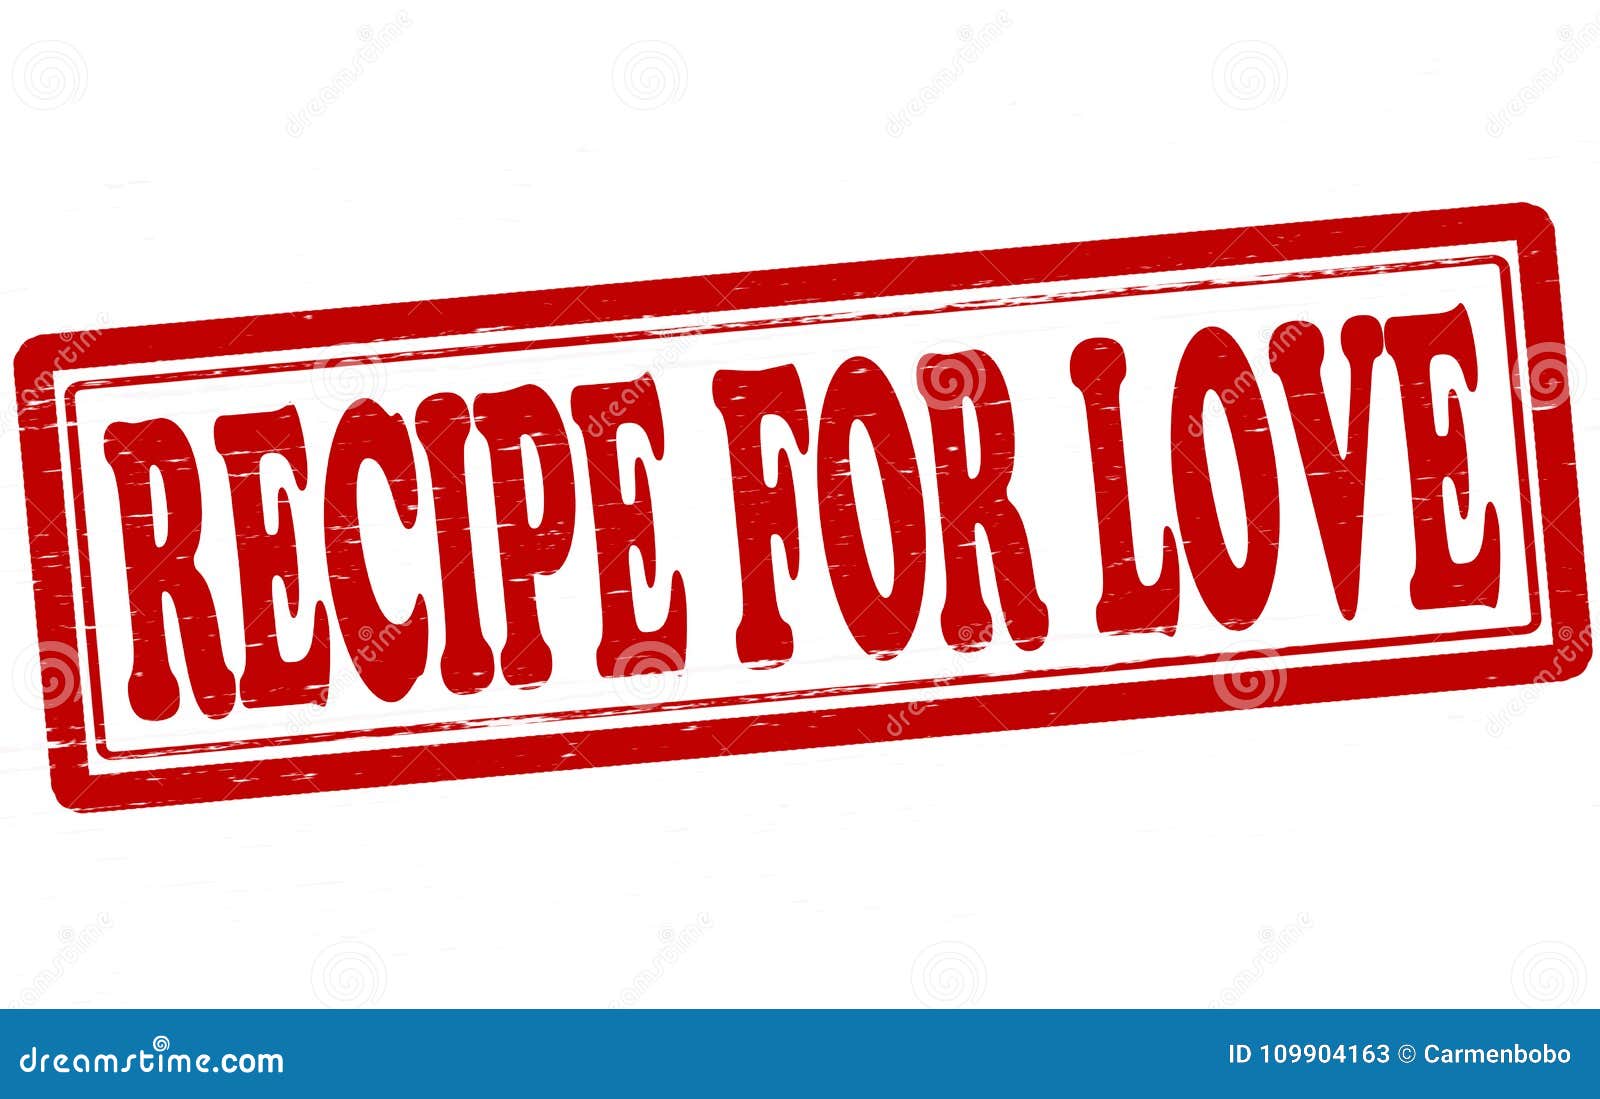 Recipe for love stock illustration. Illustration of symbol - 109904163